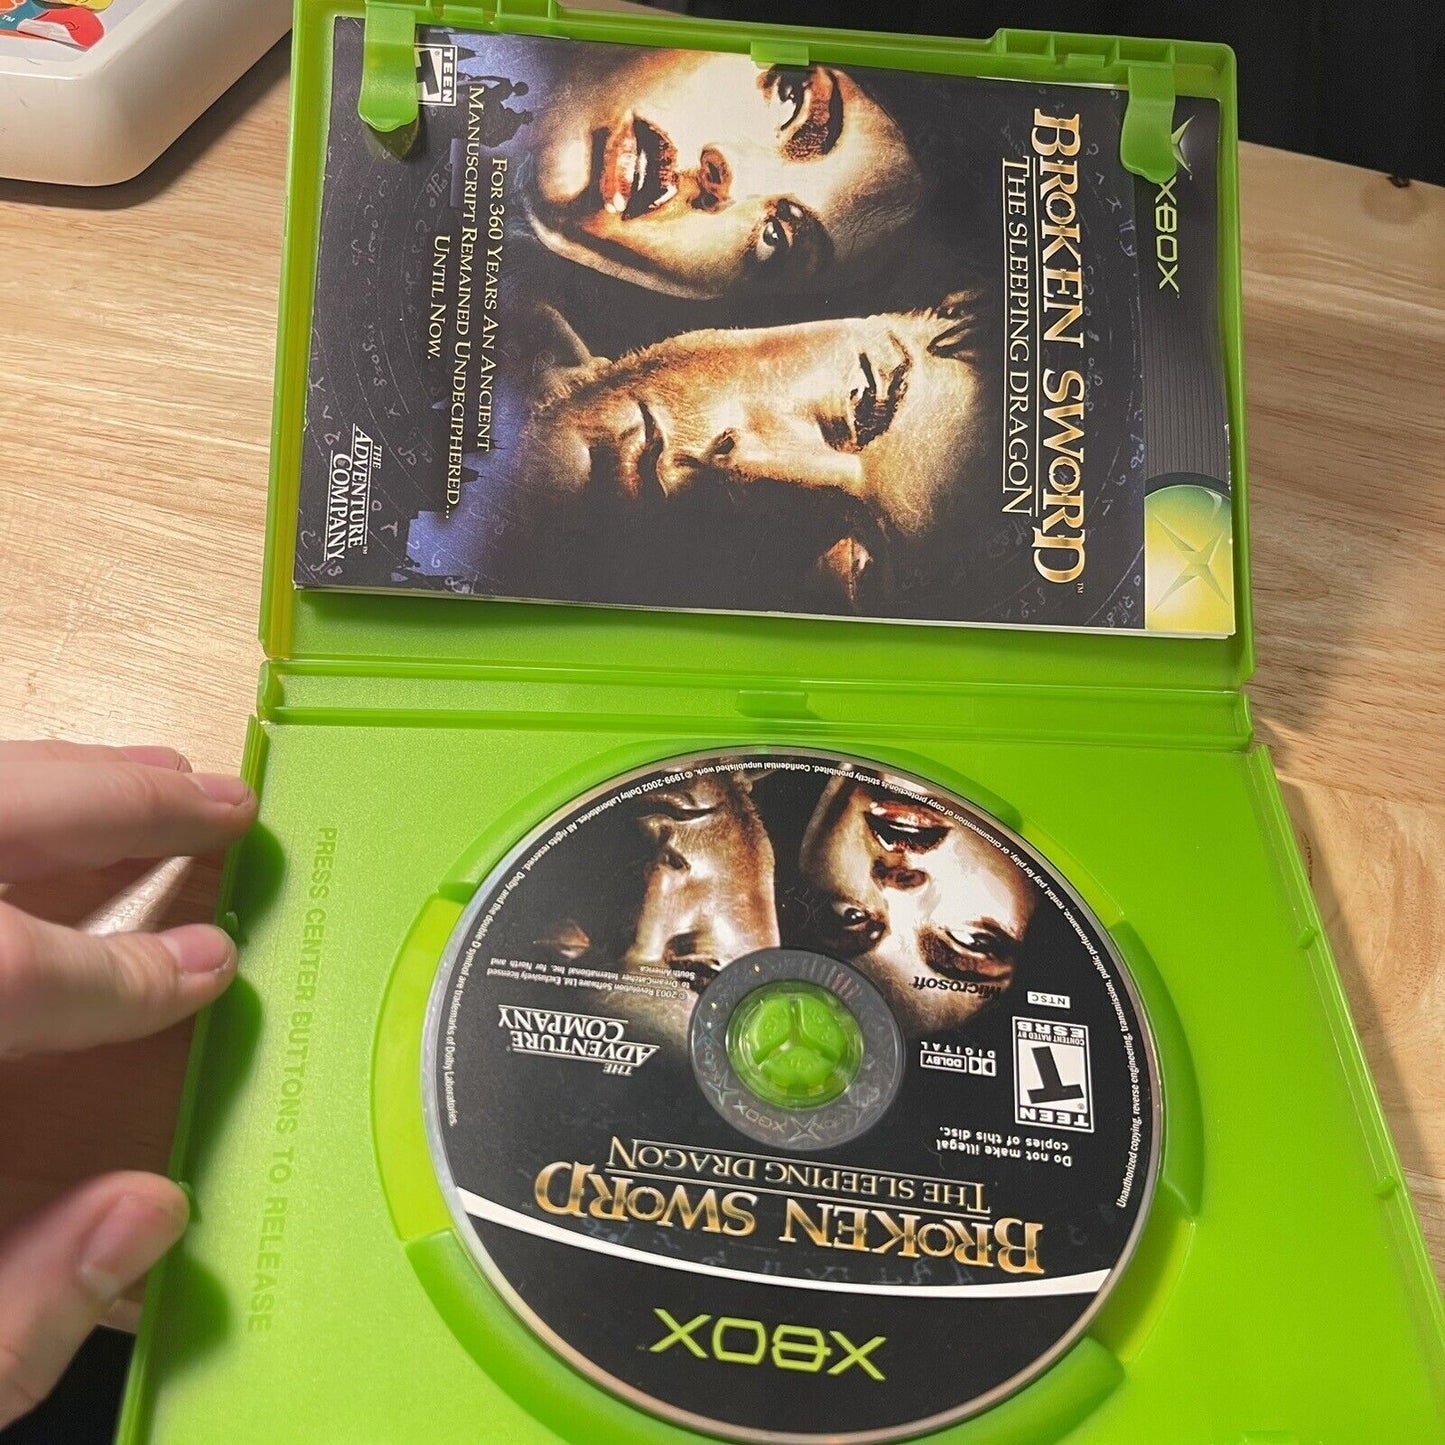 Broken Sword: The Sleeping Dragon (Microsoft Xbox, 2003) W/ Manual - Tested